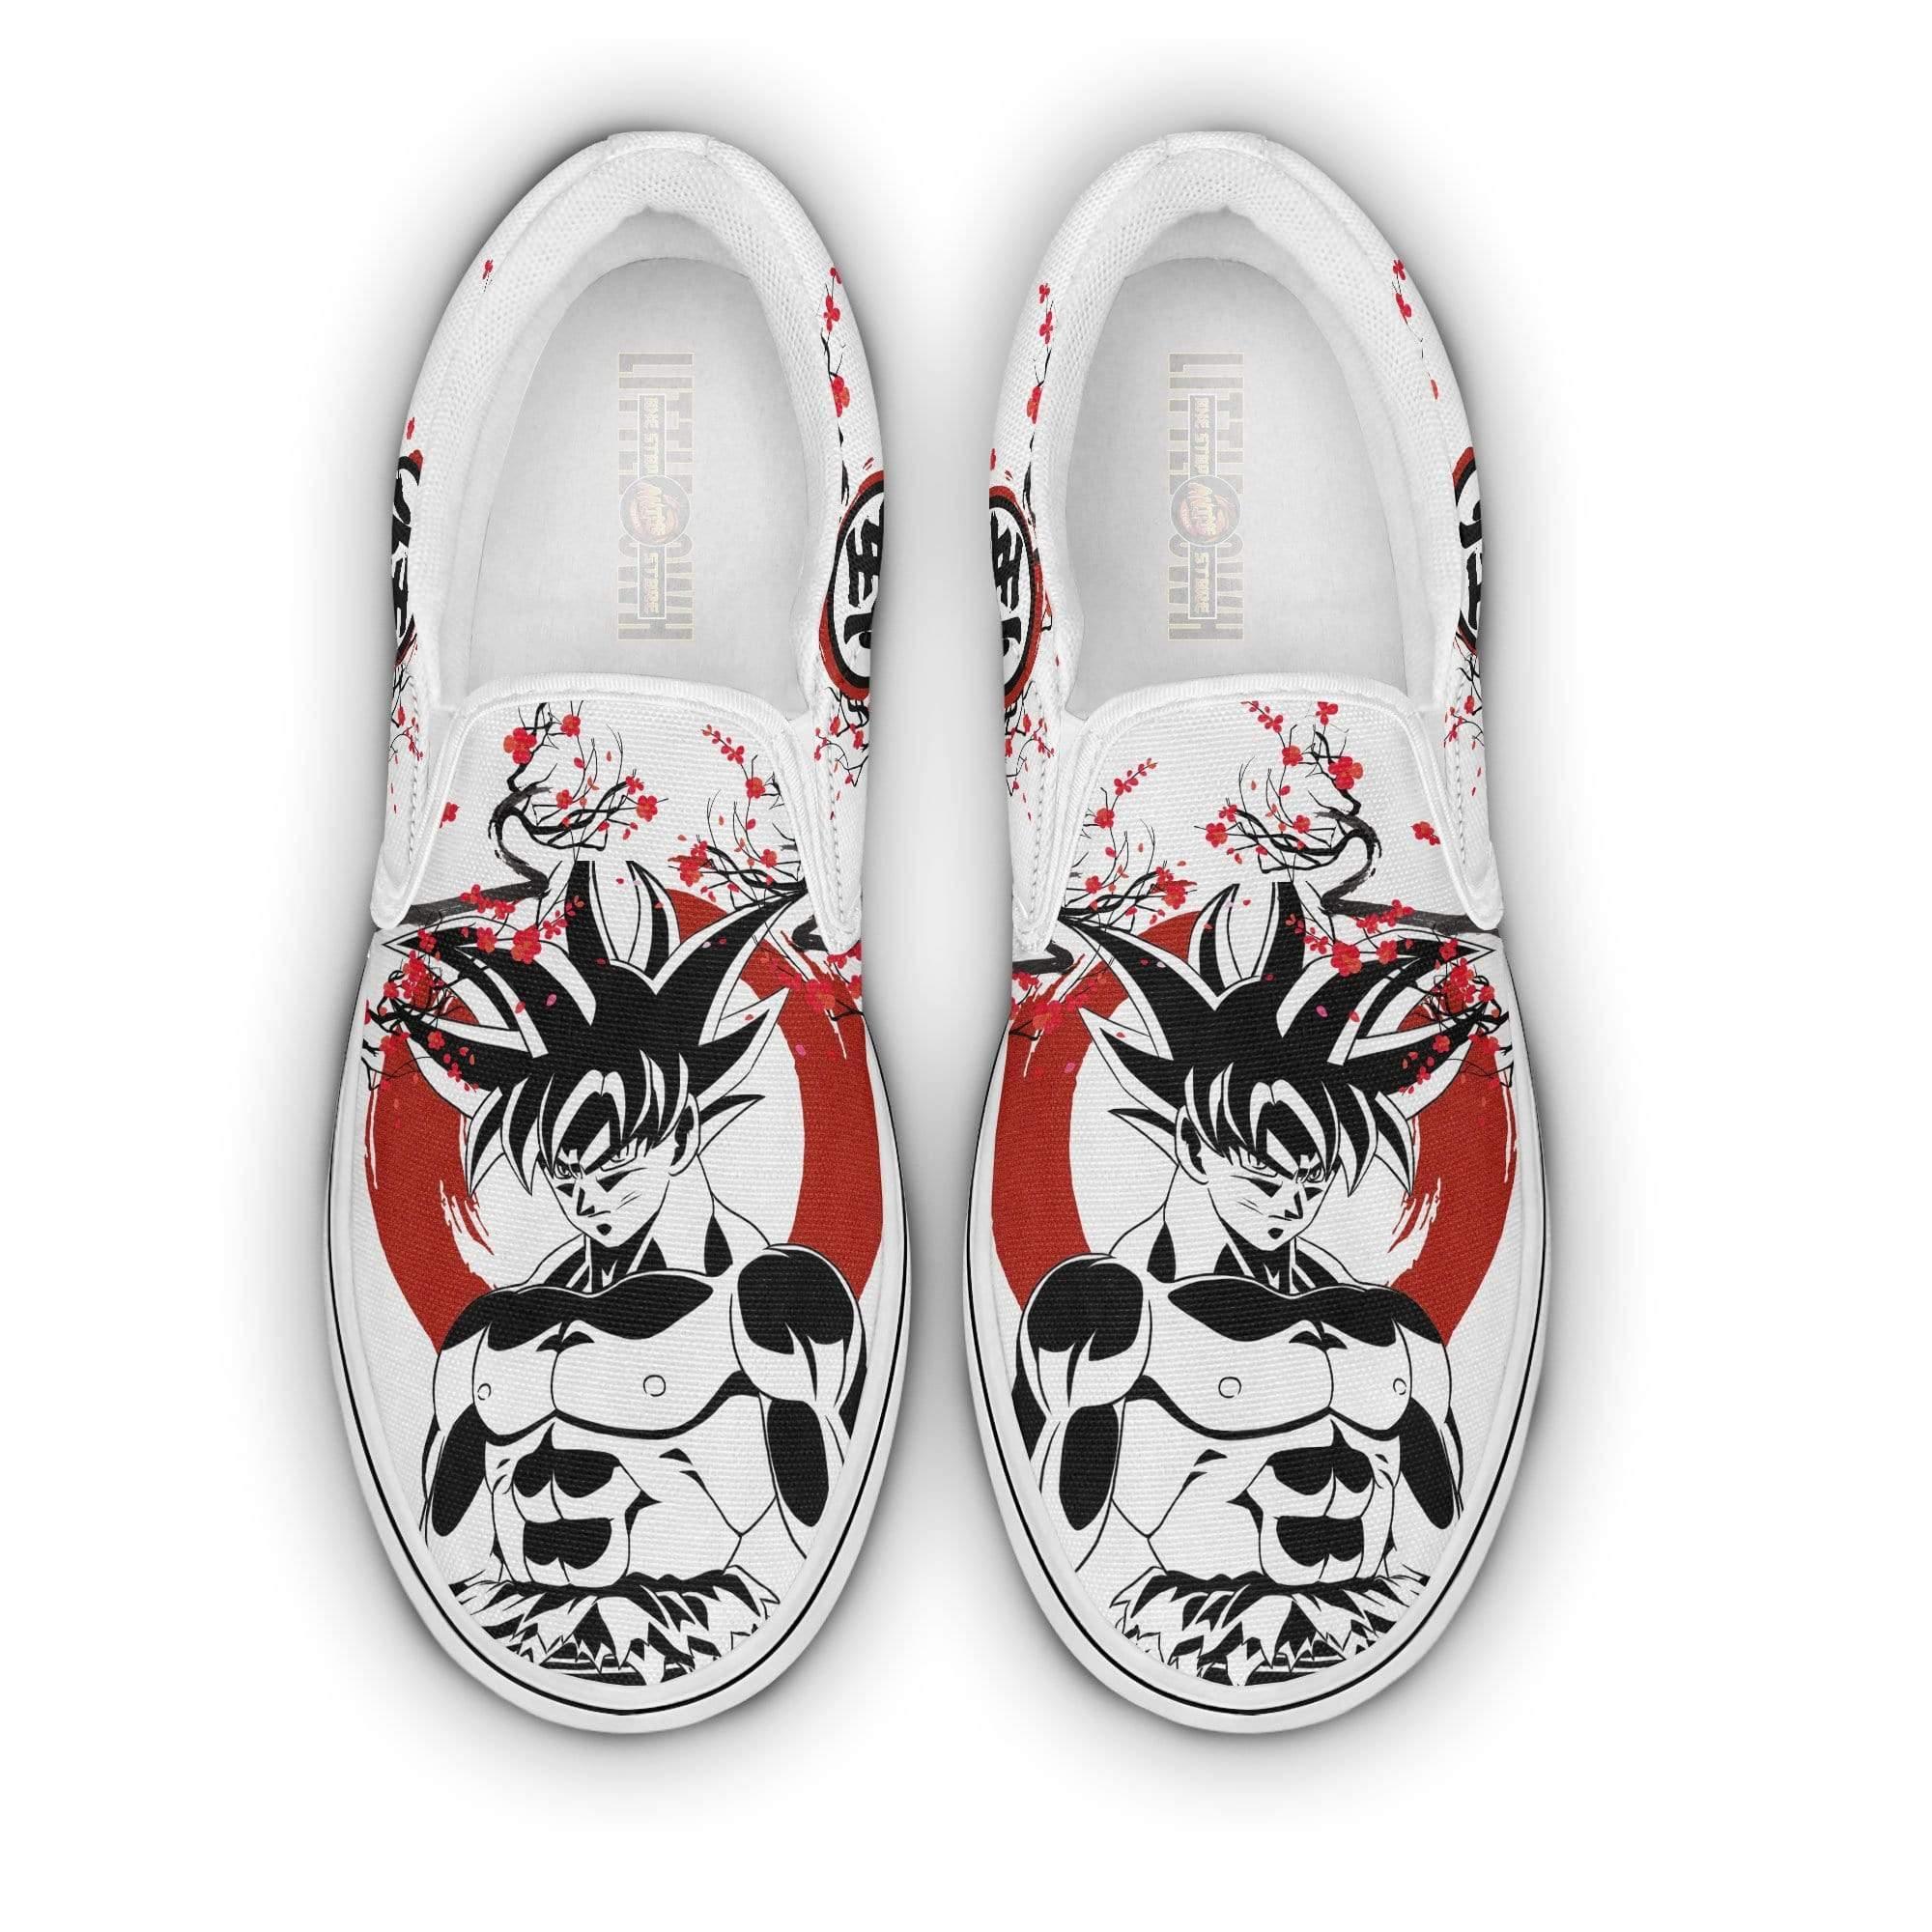 Son Goku Dragon Ball Z Sneakers Anime Shoes Custom Saiyan Under The Sun Classic Slip-On